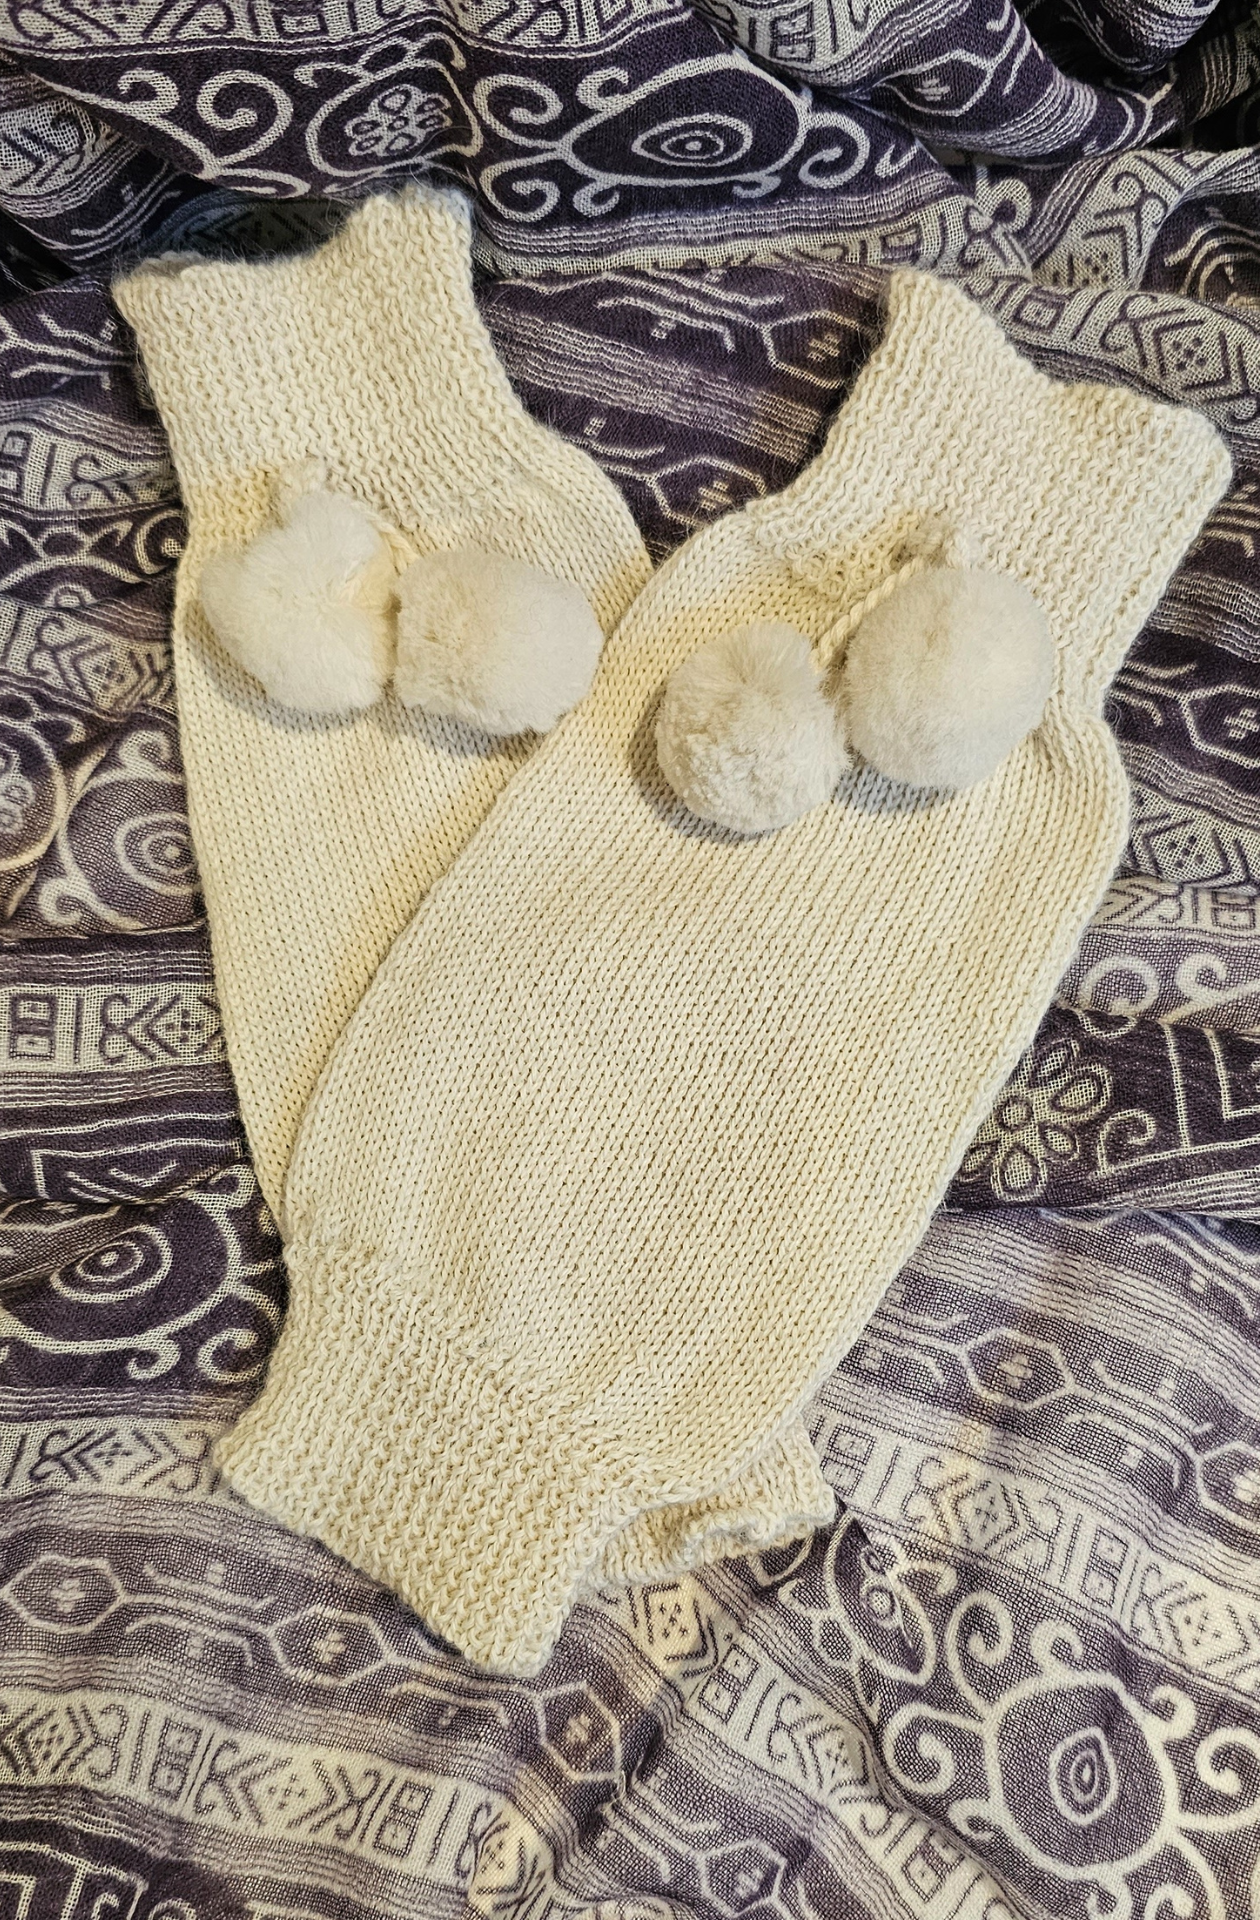 Baby Alpaca Wrist or Arm Warmers, handknitted in Peru.